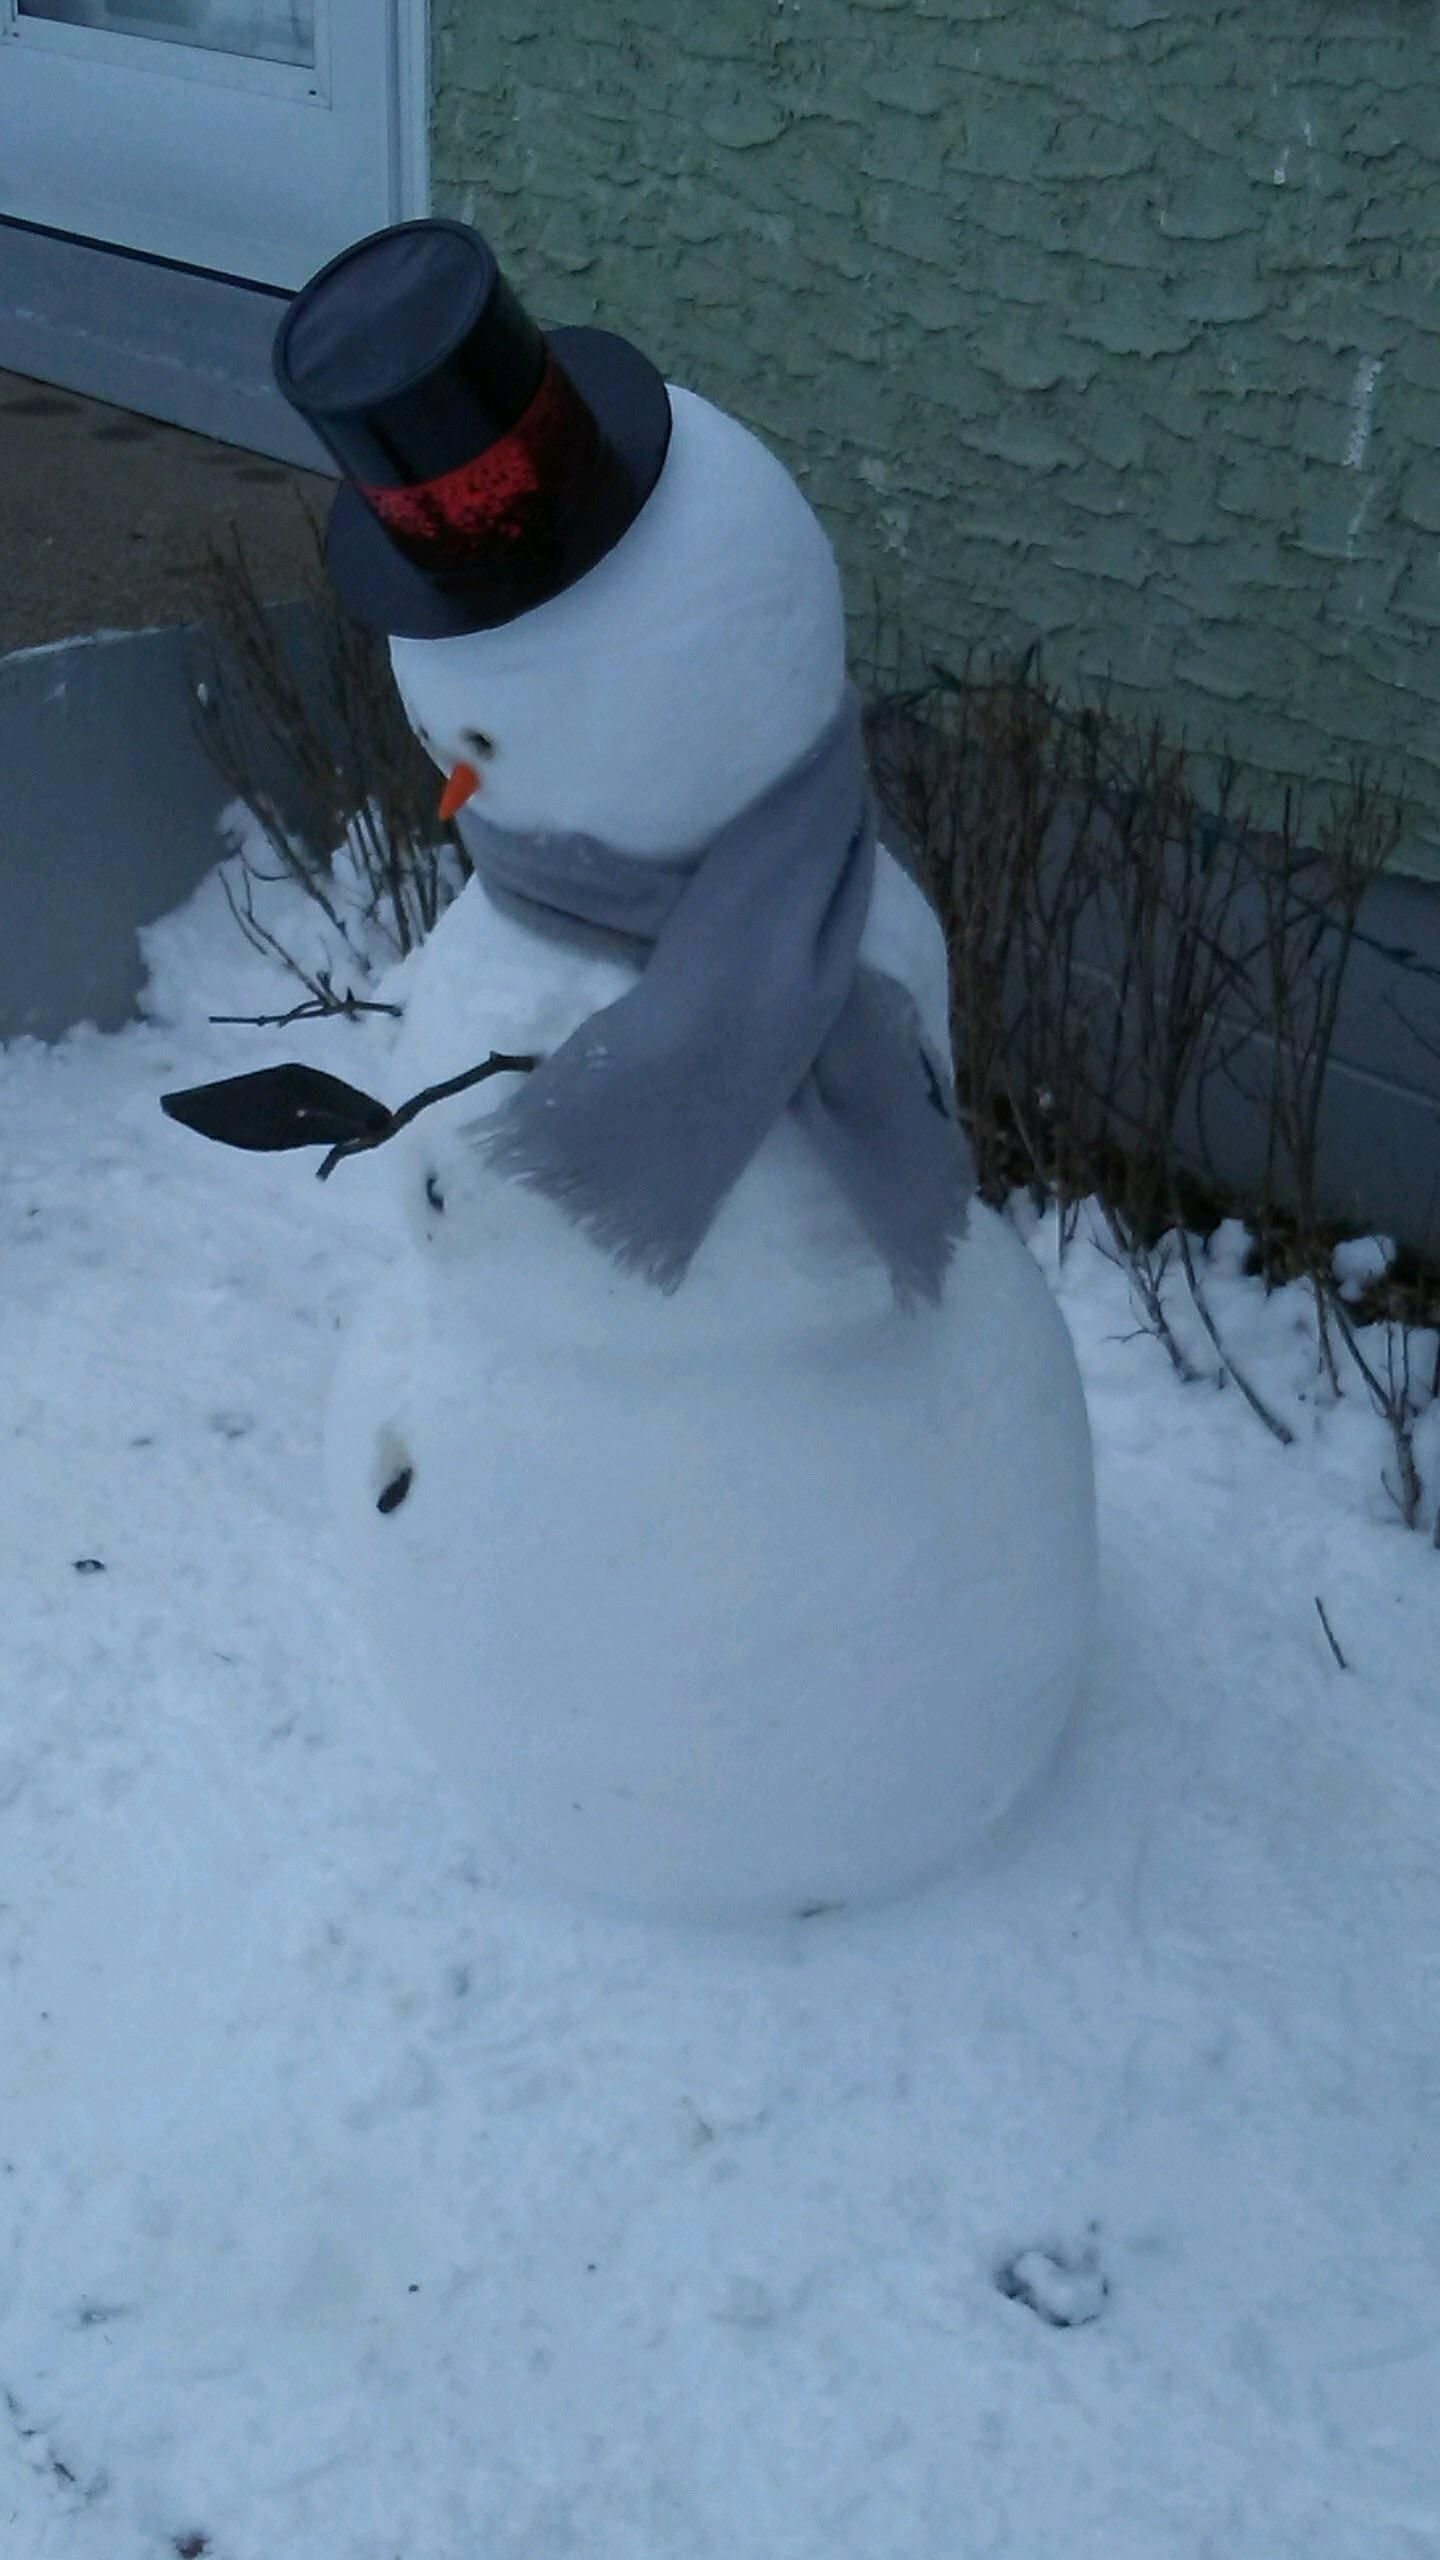 My dad calls this “2018 Snowman”